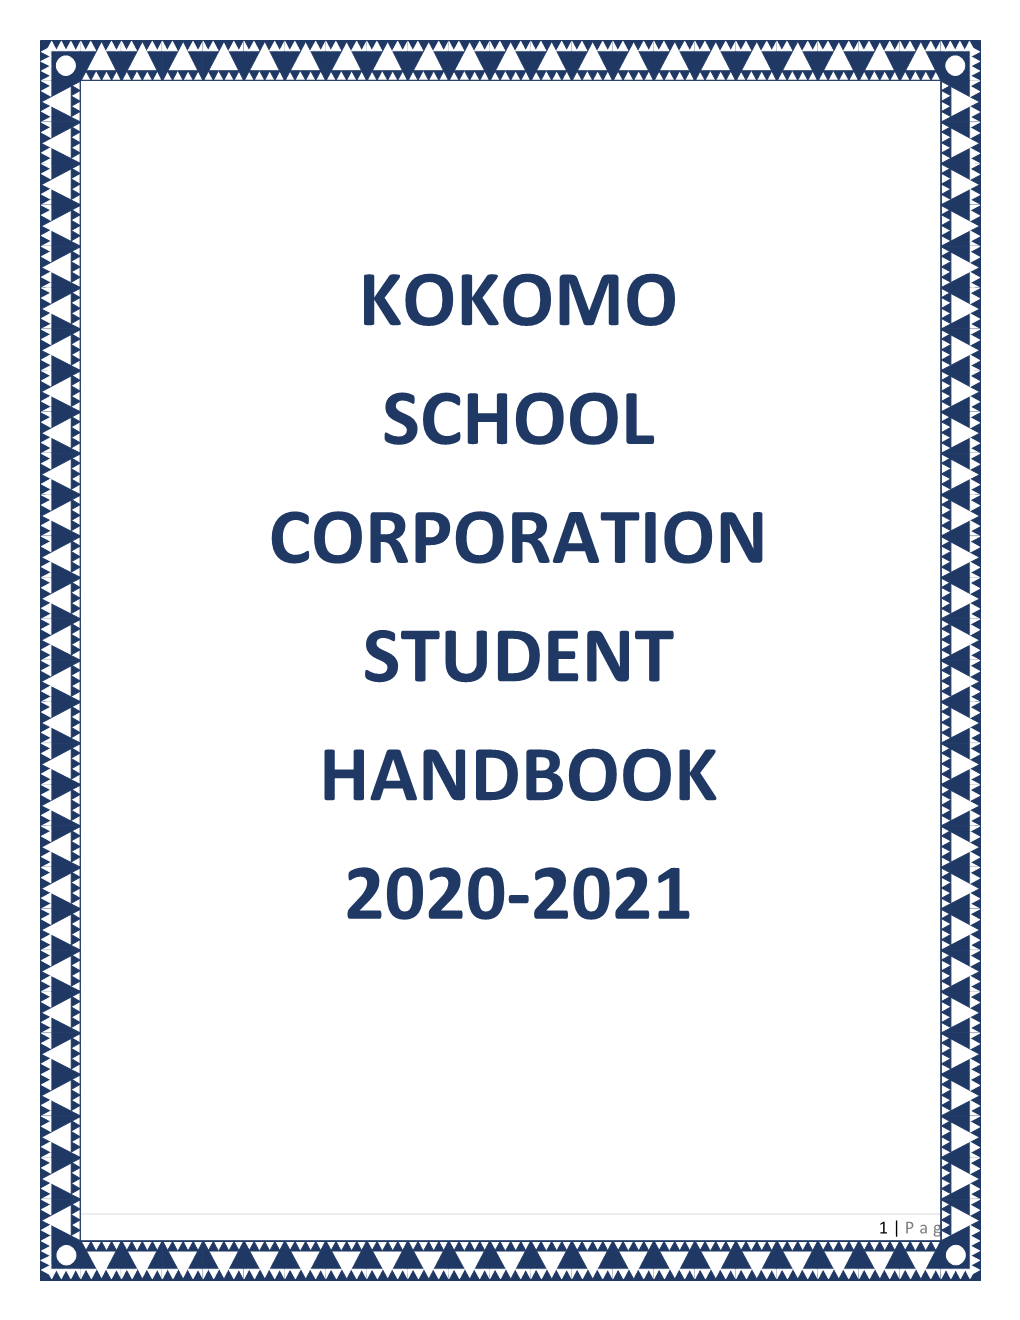 Kokomo School Corporation Student Handbook 2020-2021